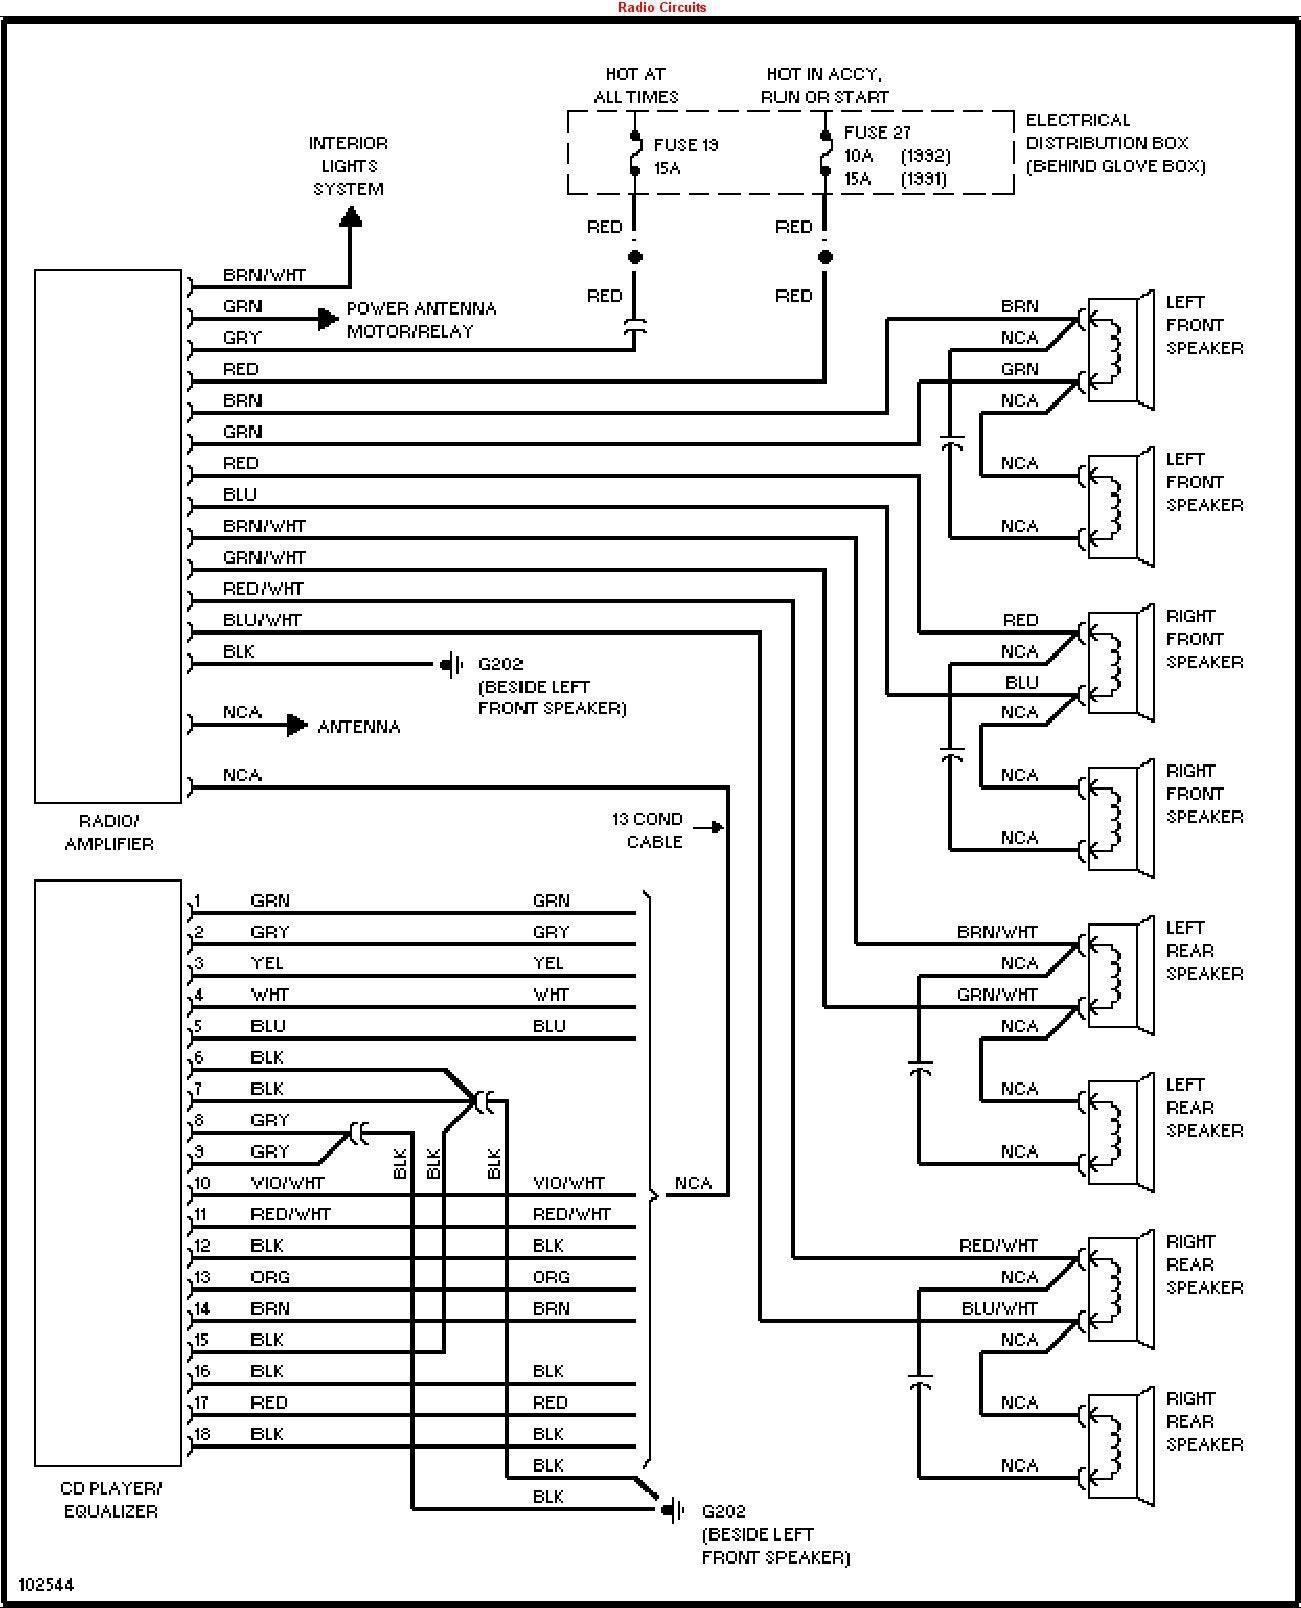 avh p2300dvd wiring diagram gallery wiring diagram rh visithoustontexas org Pioneer Navigation Wiring Diagram Pioneer Radio Wiring Diagram